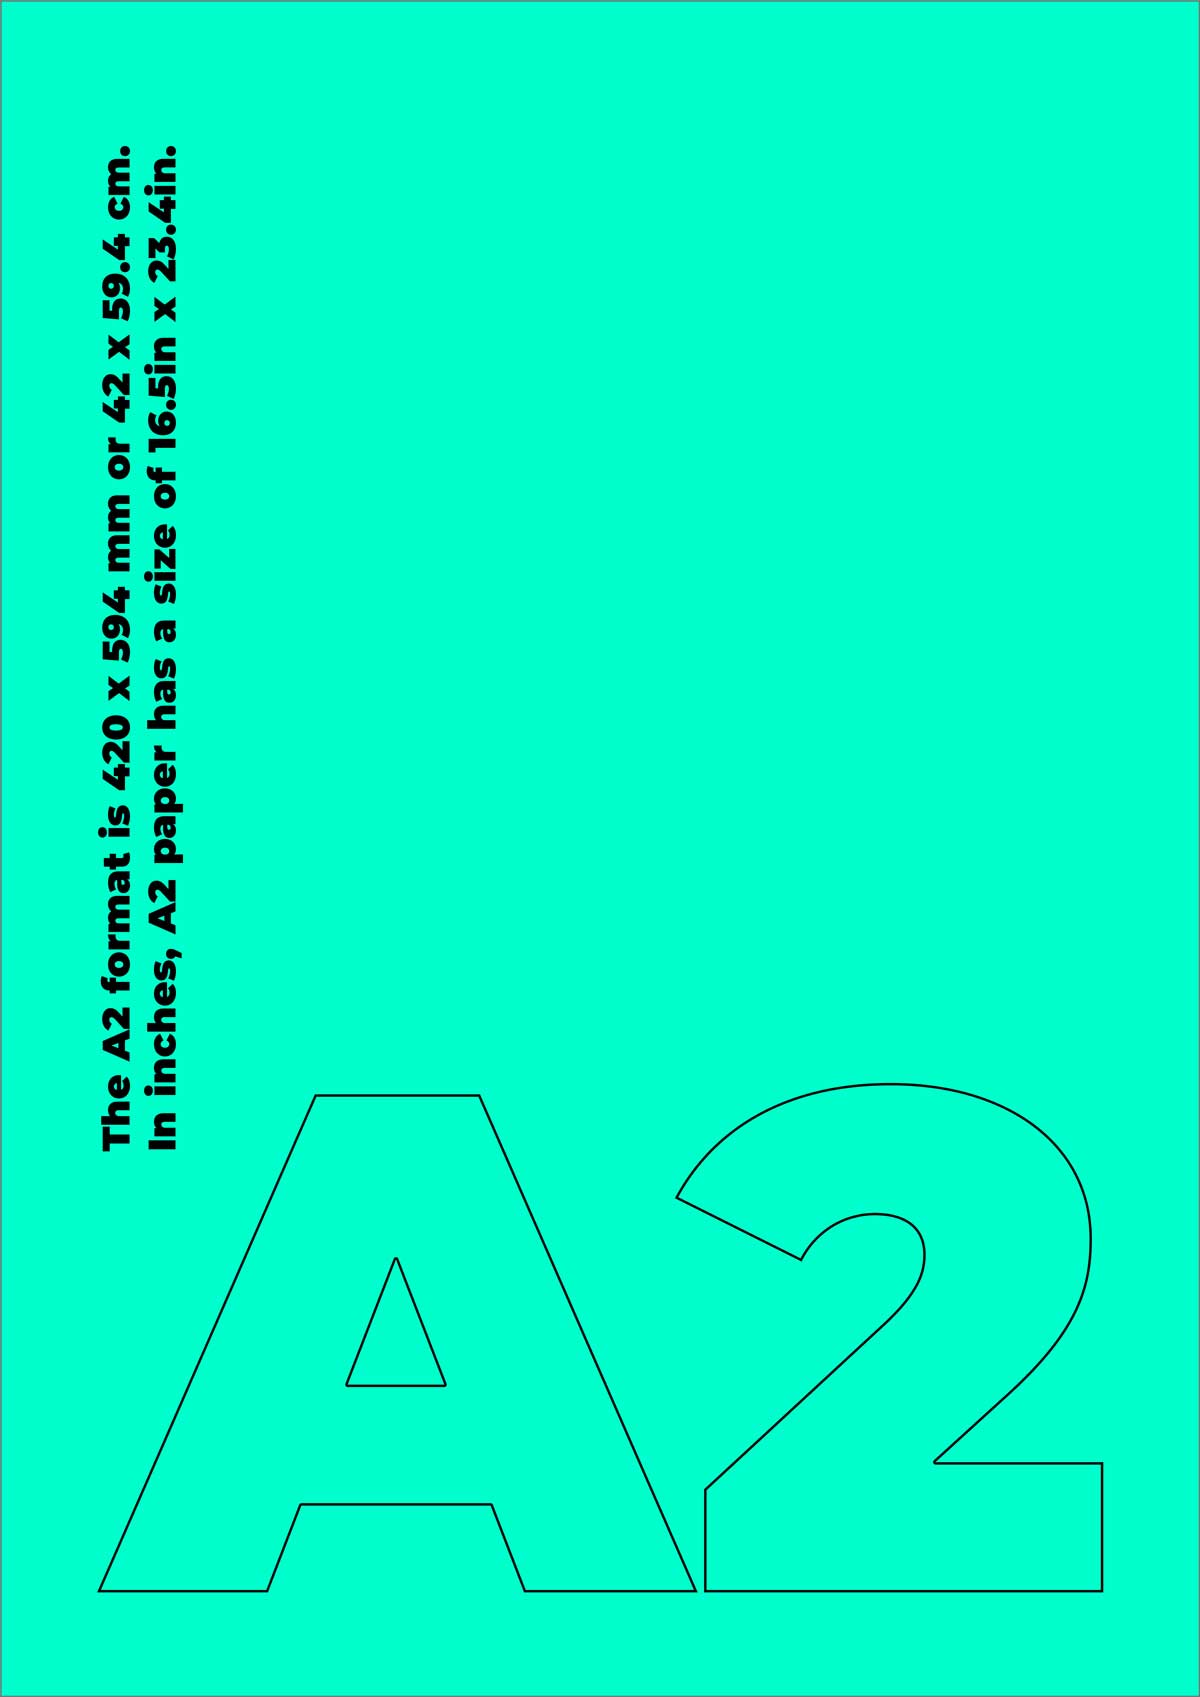 A2 Format | A2 Paper Size & Uses | Exploring A2 Paper Dimensions